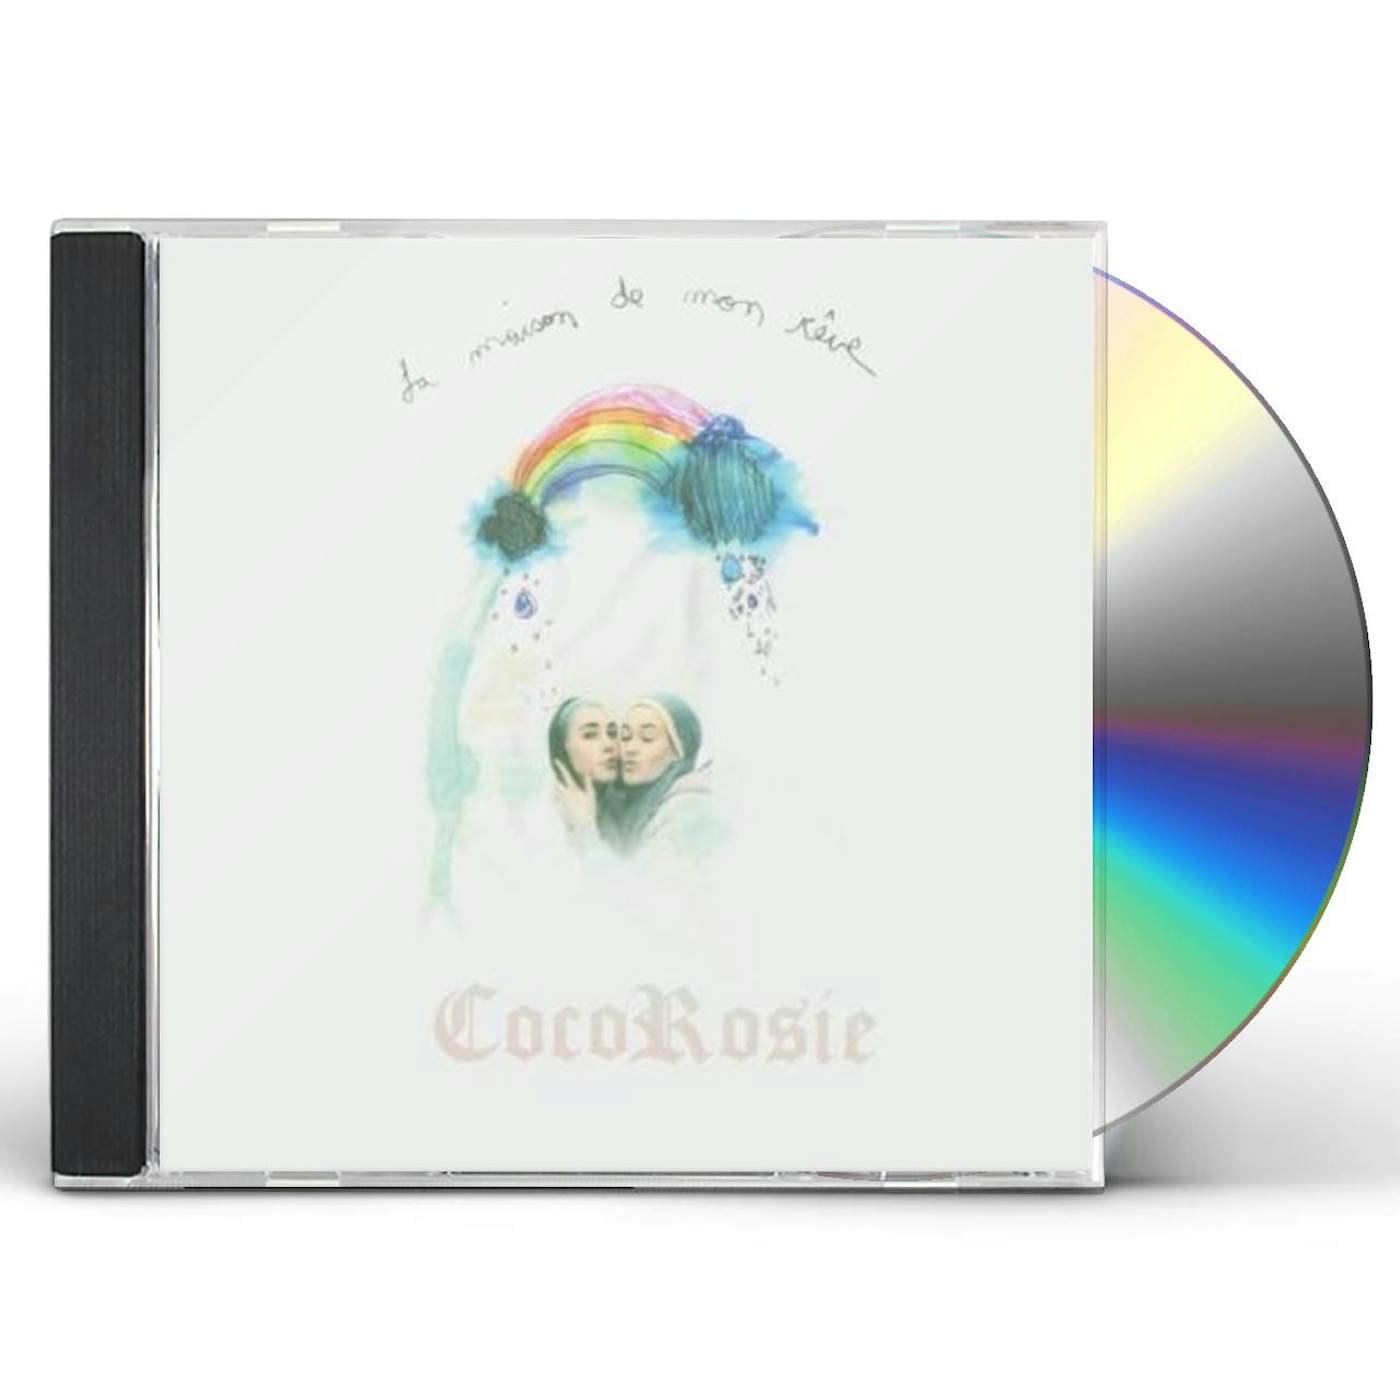 CocoRosie LA MAISON DE MON REVE CD